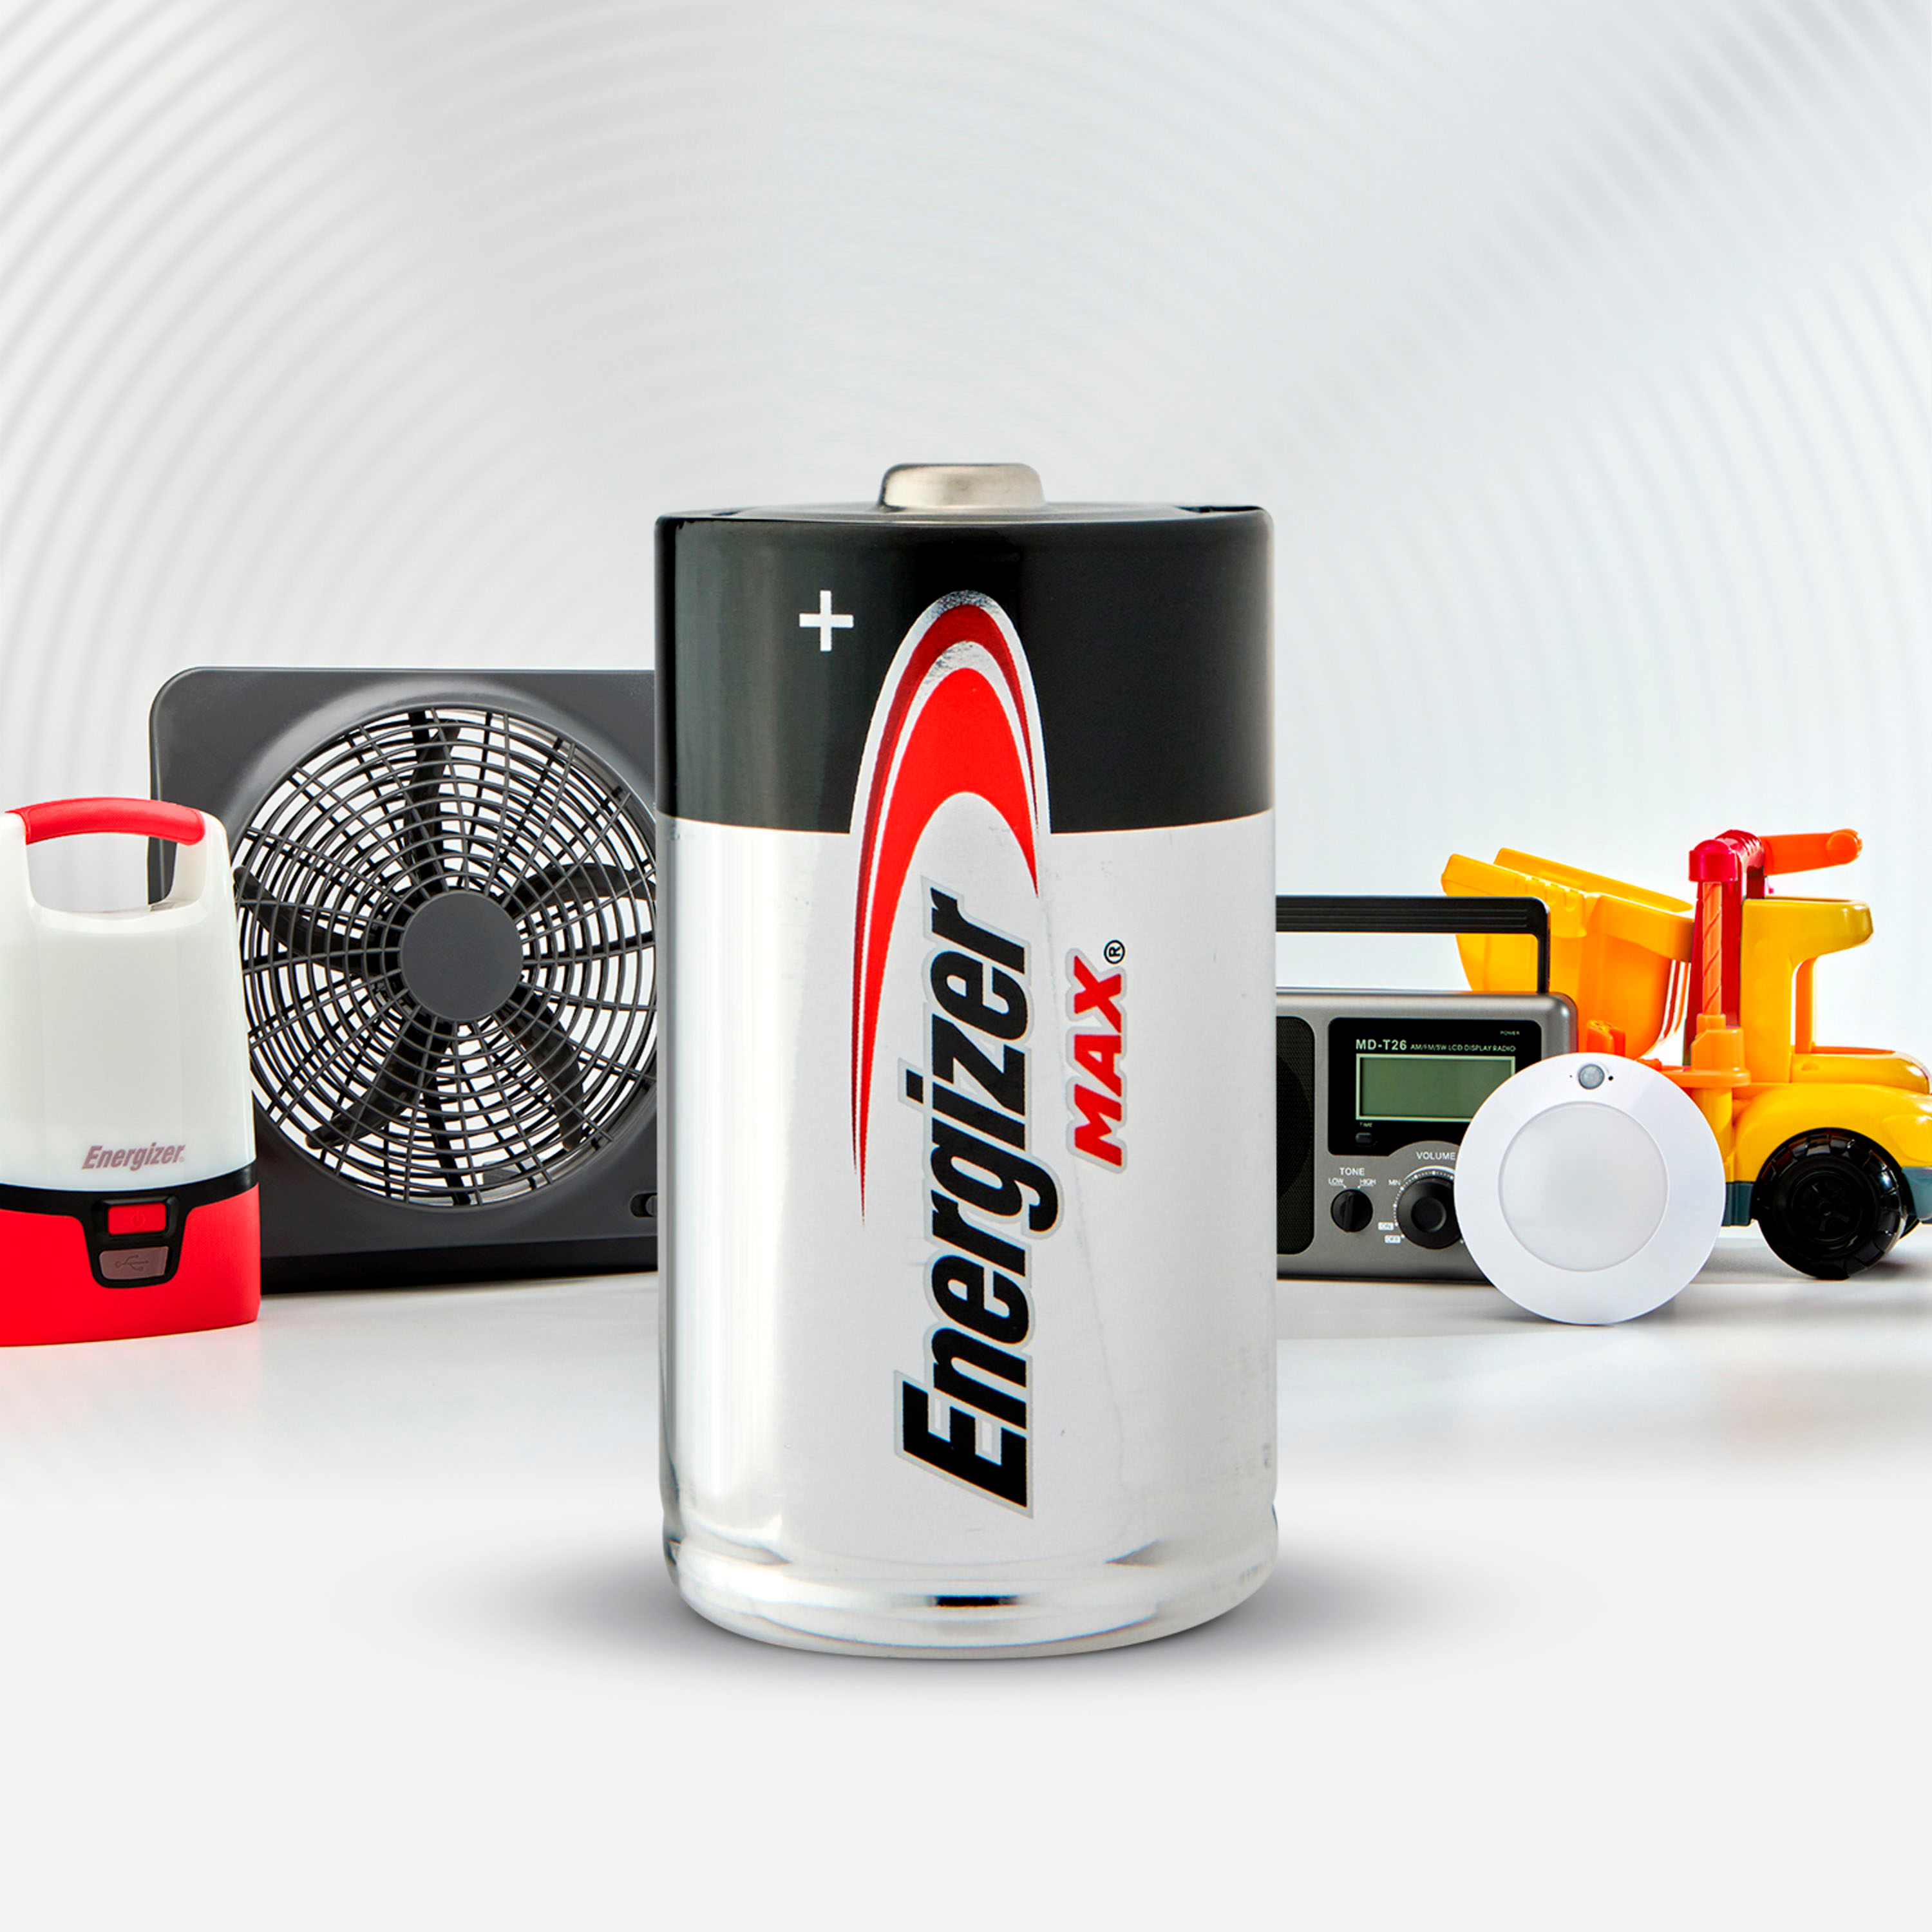 Energizer MAX® Baterias D - Energizer